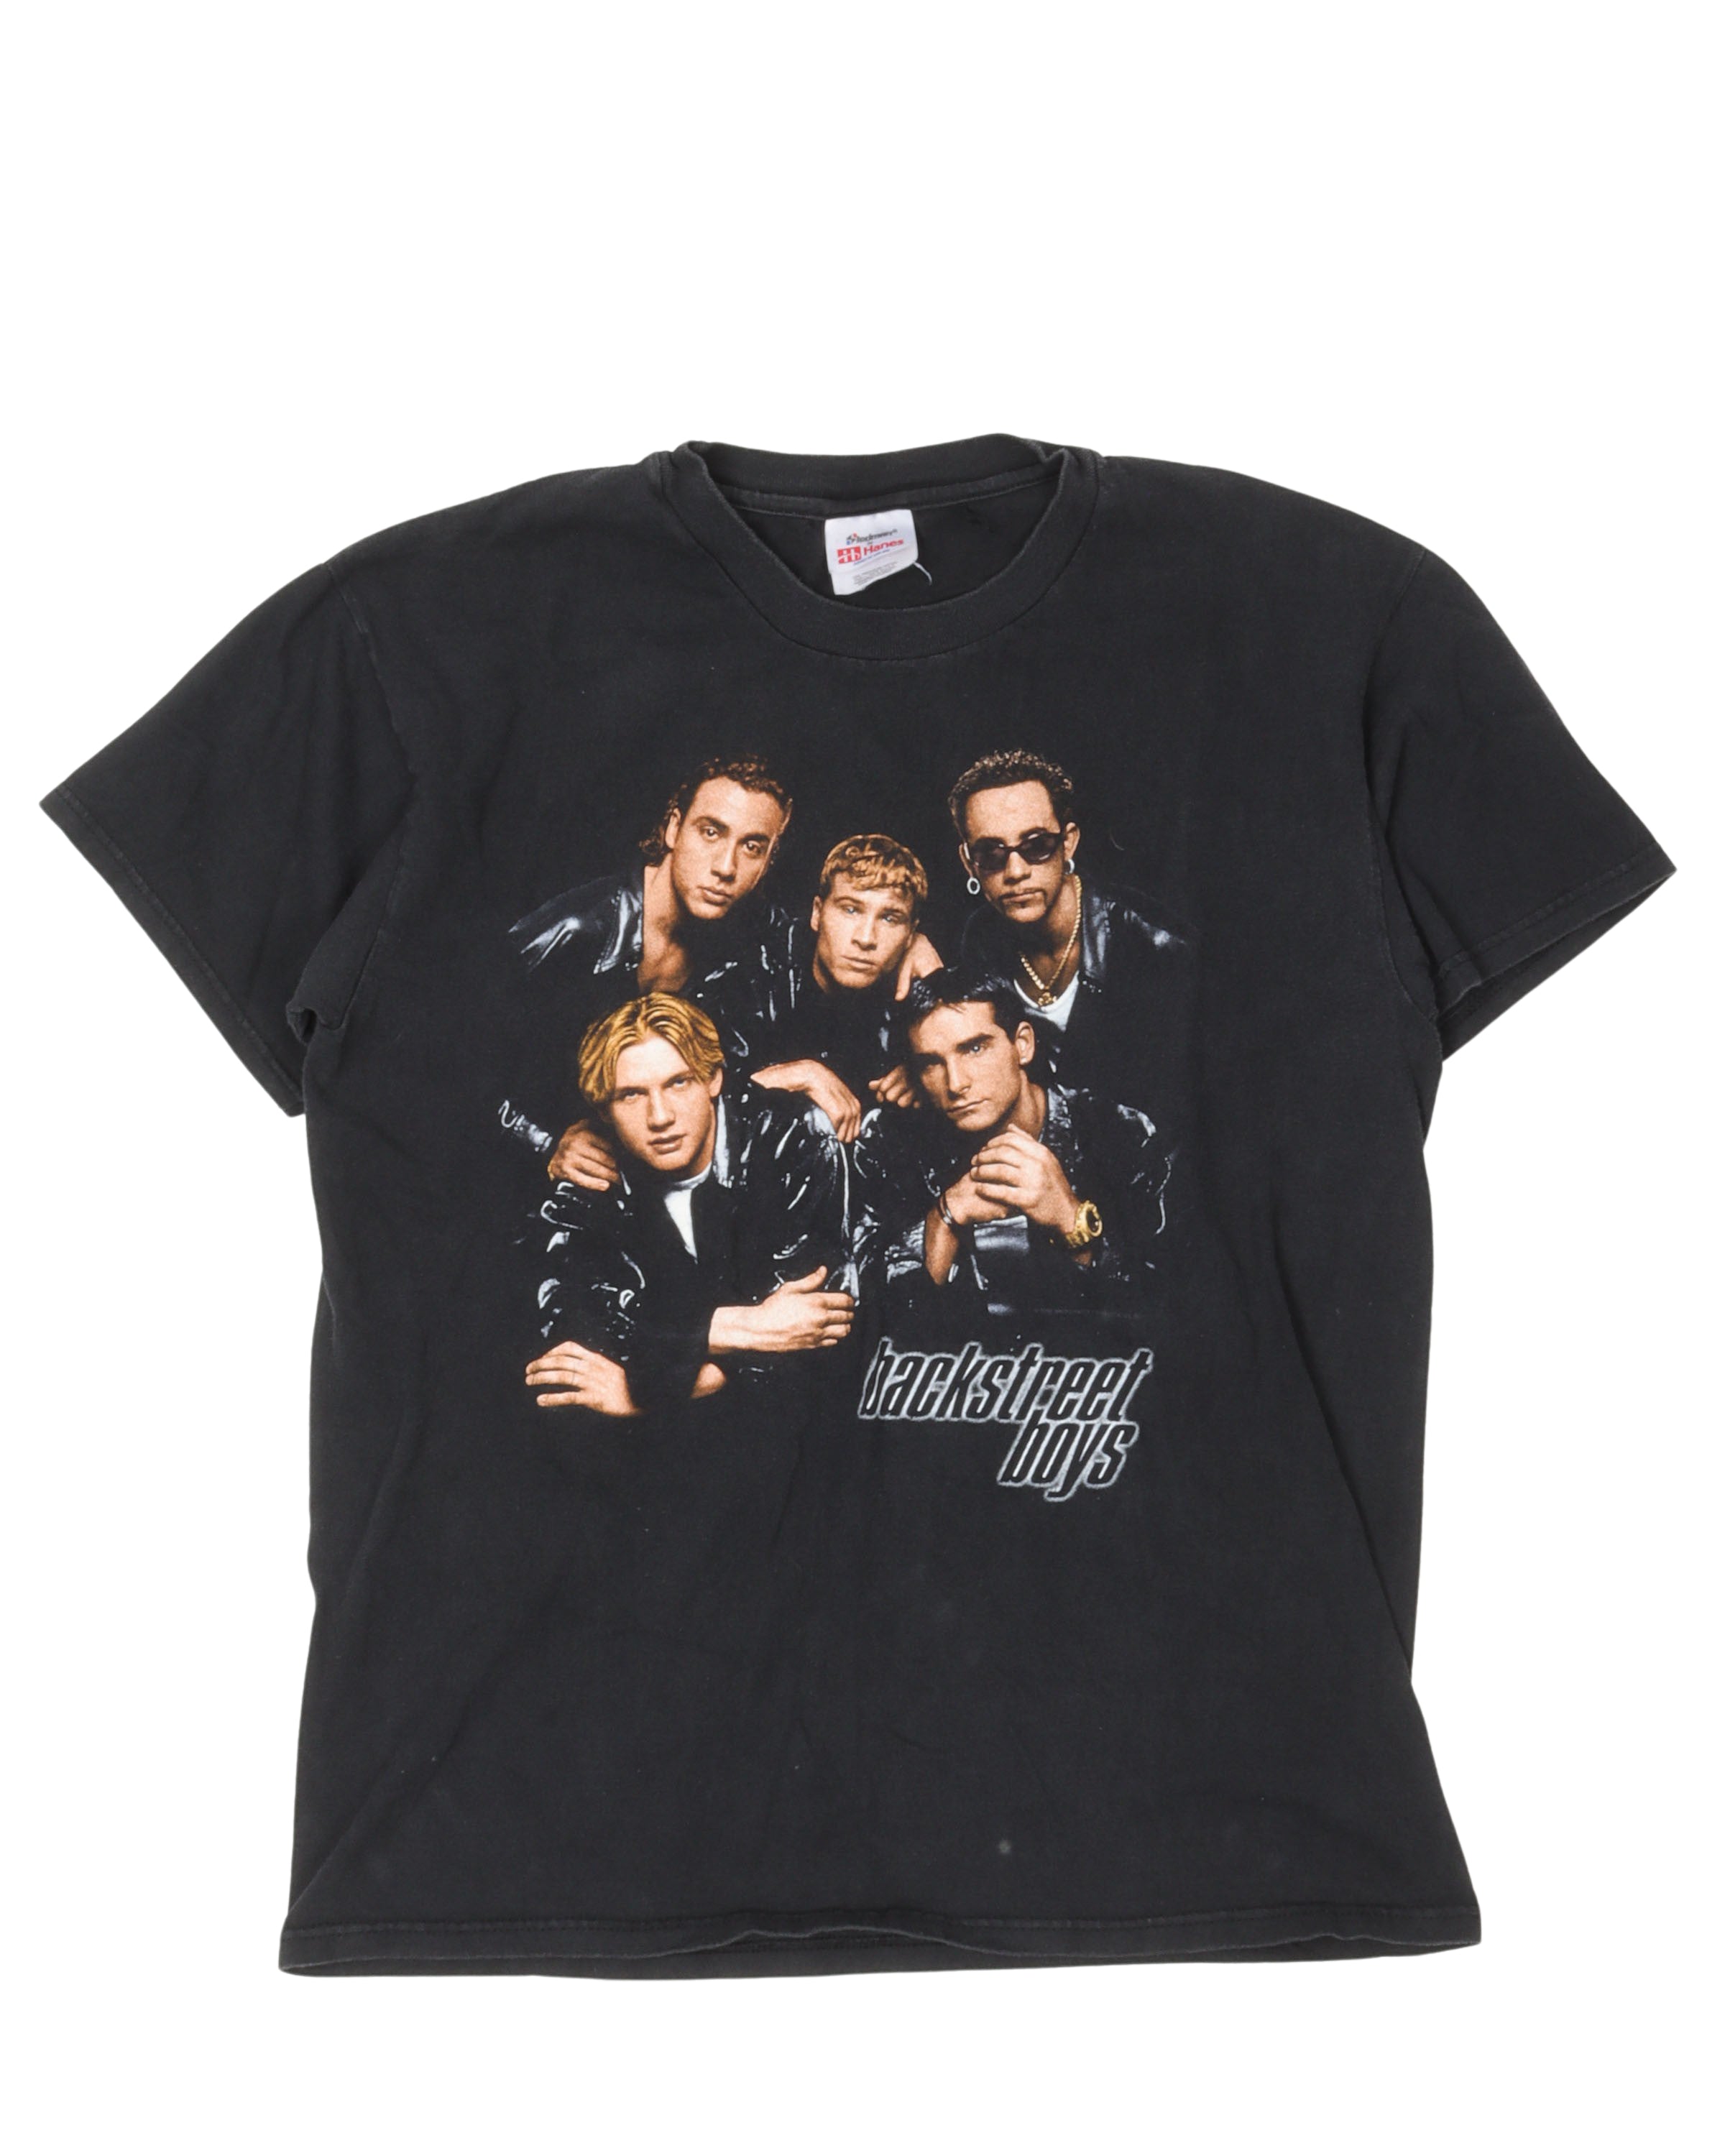 Vintage Backstreet Boys Concert T-Shirt 1998 M